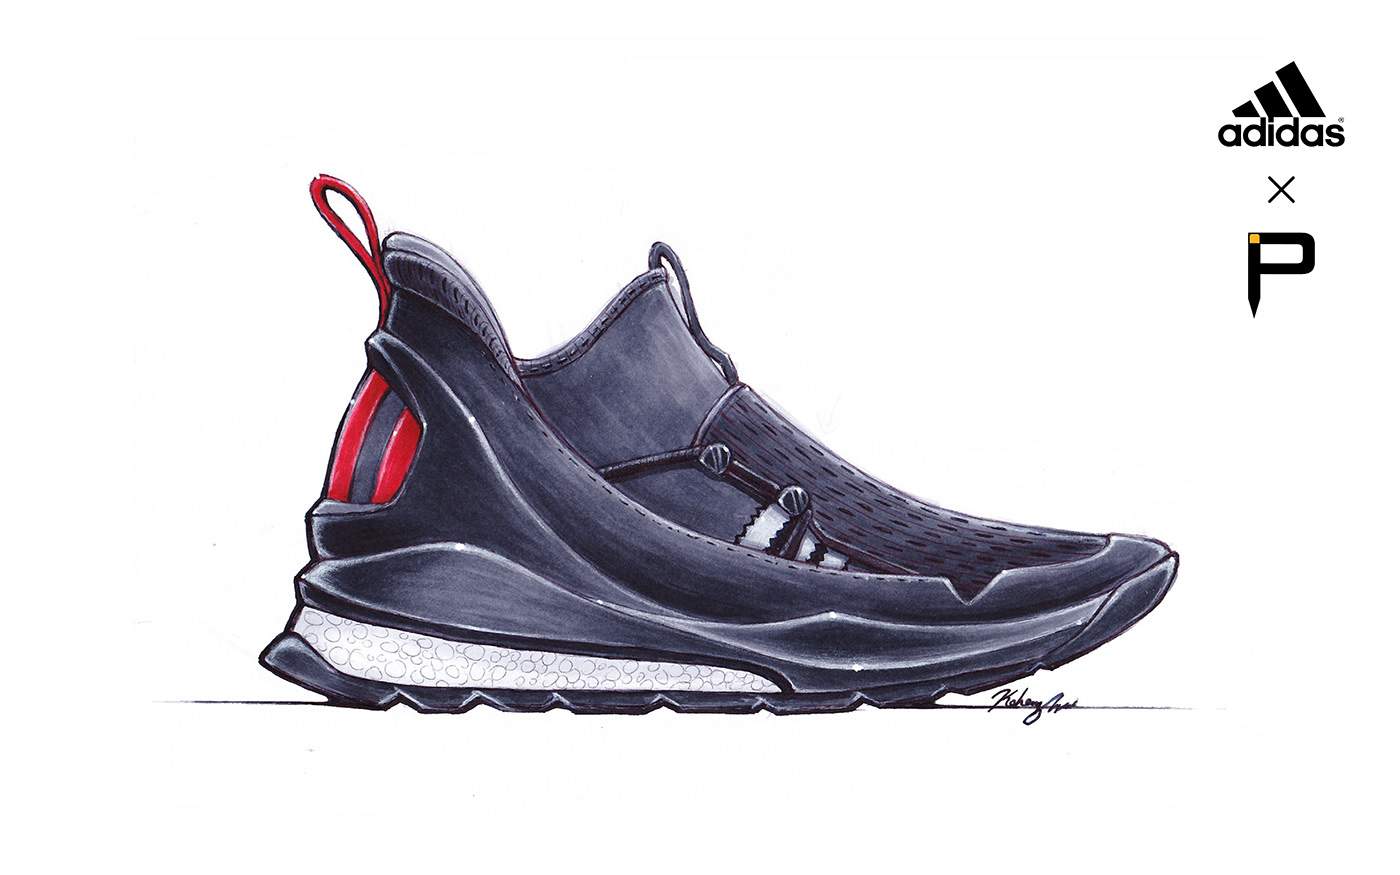 footwear design Pensole adidas footwear product design  sneakers shoe design conceptkicks shoes design industrial design 